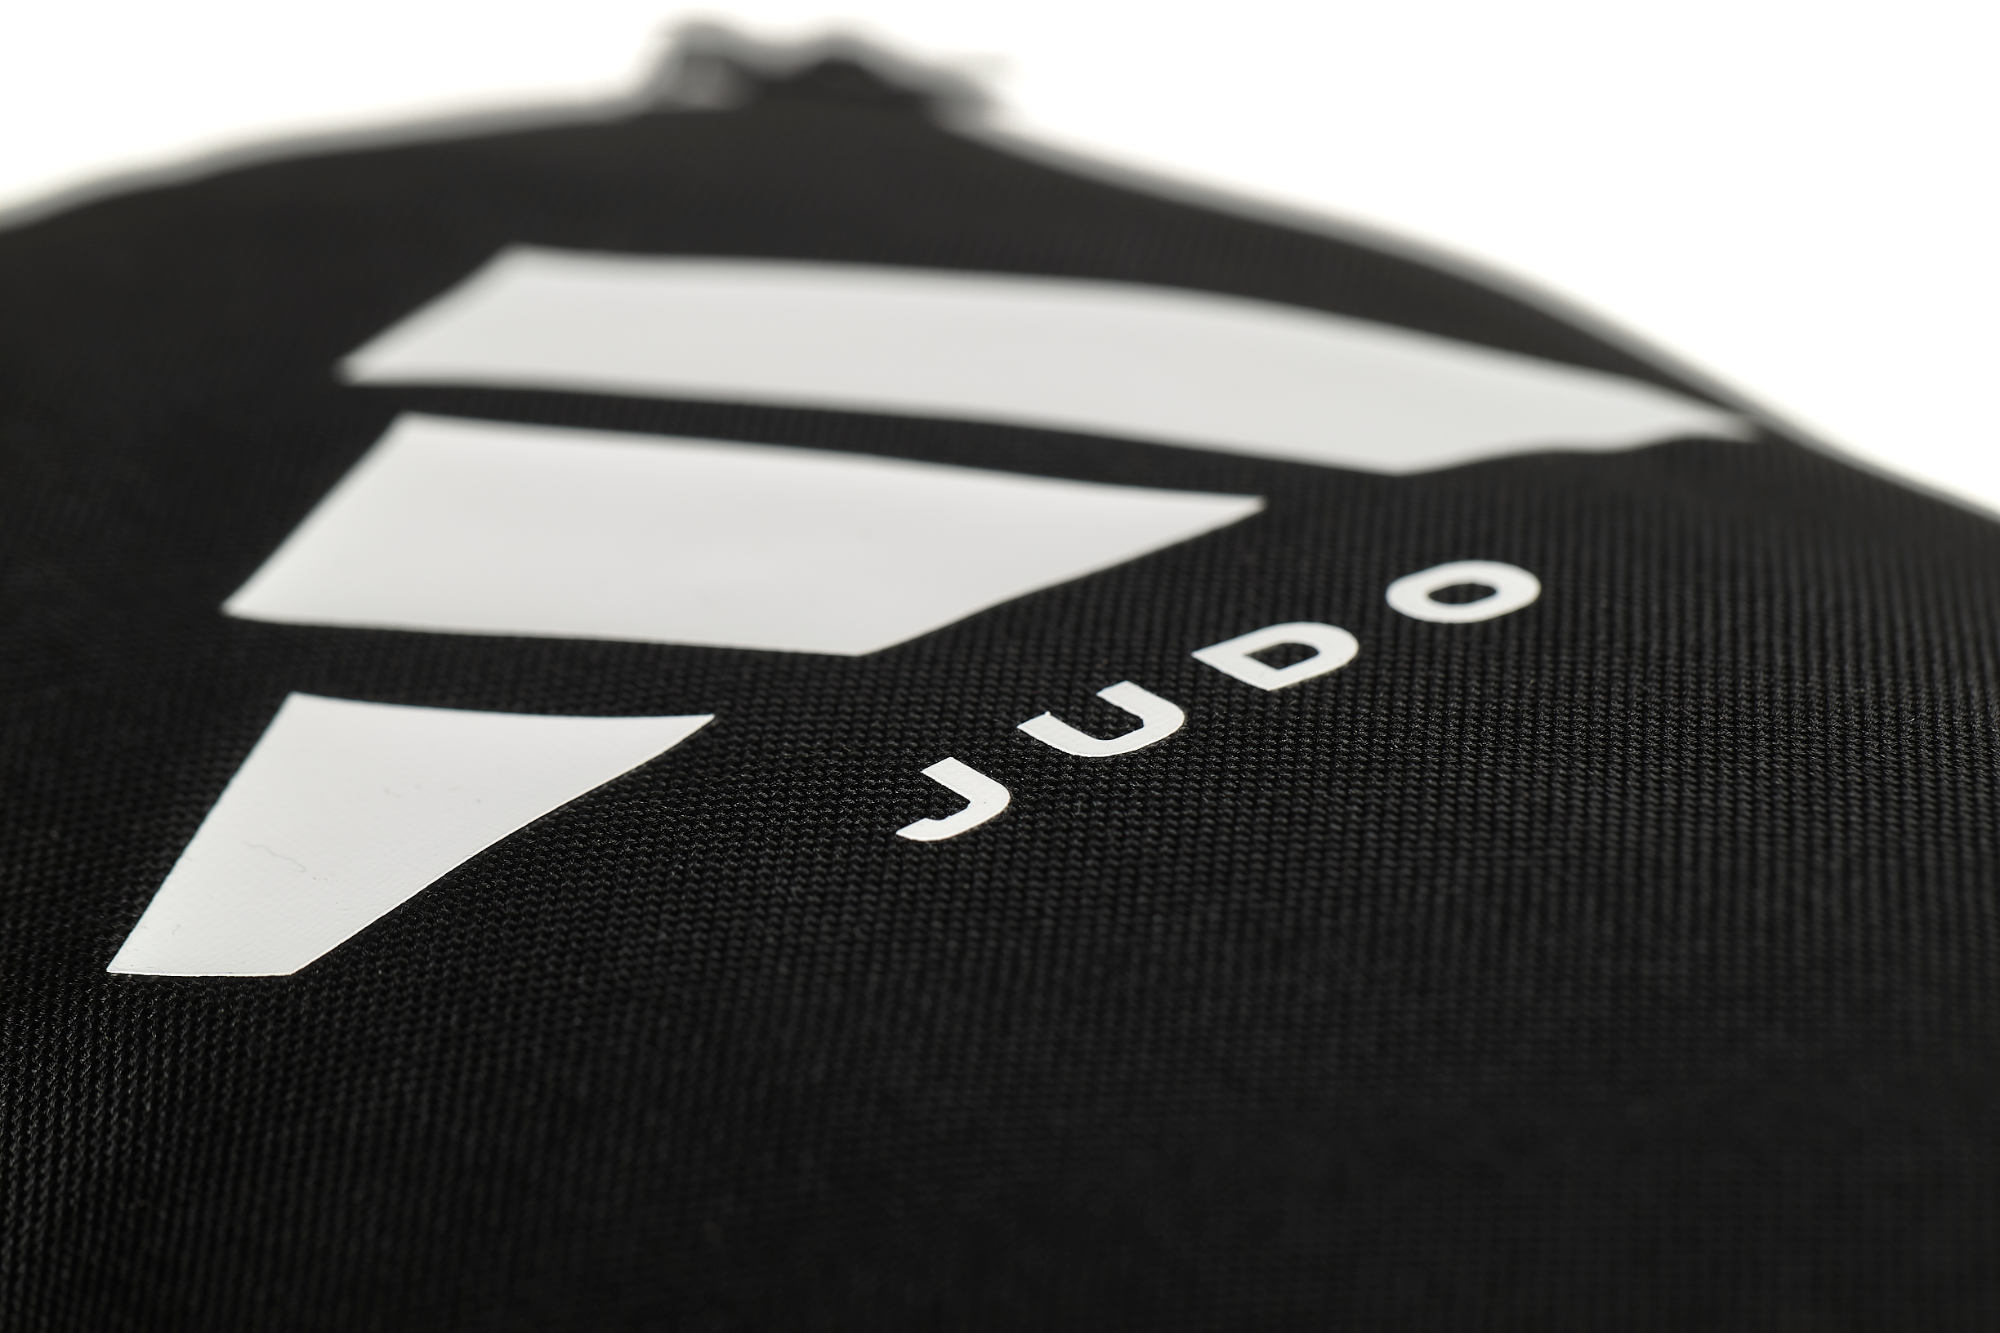 adidas Sport Rucksack "Judo" black/white, adiACC090J